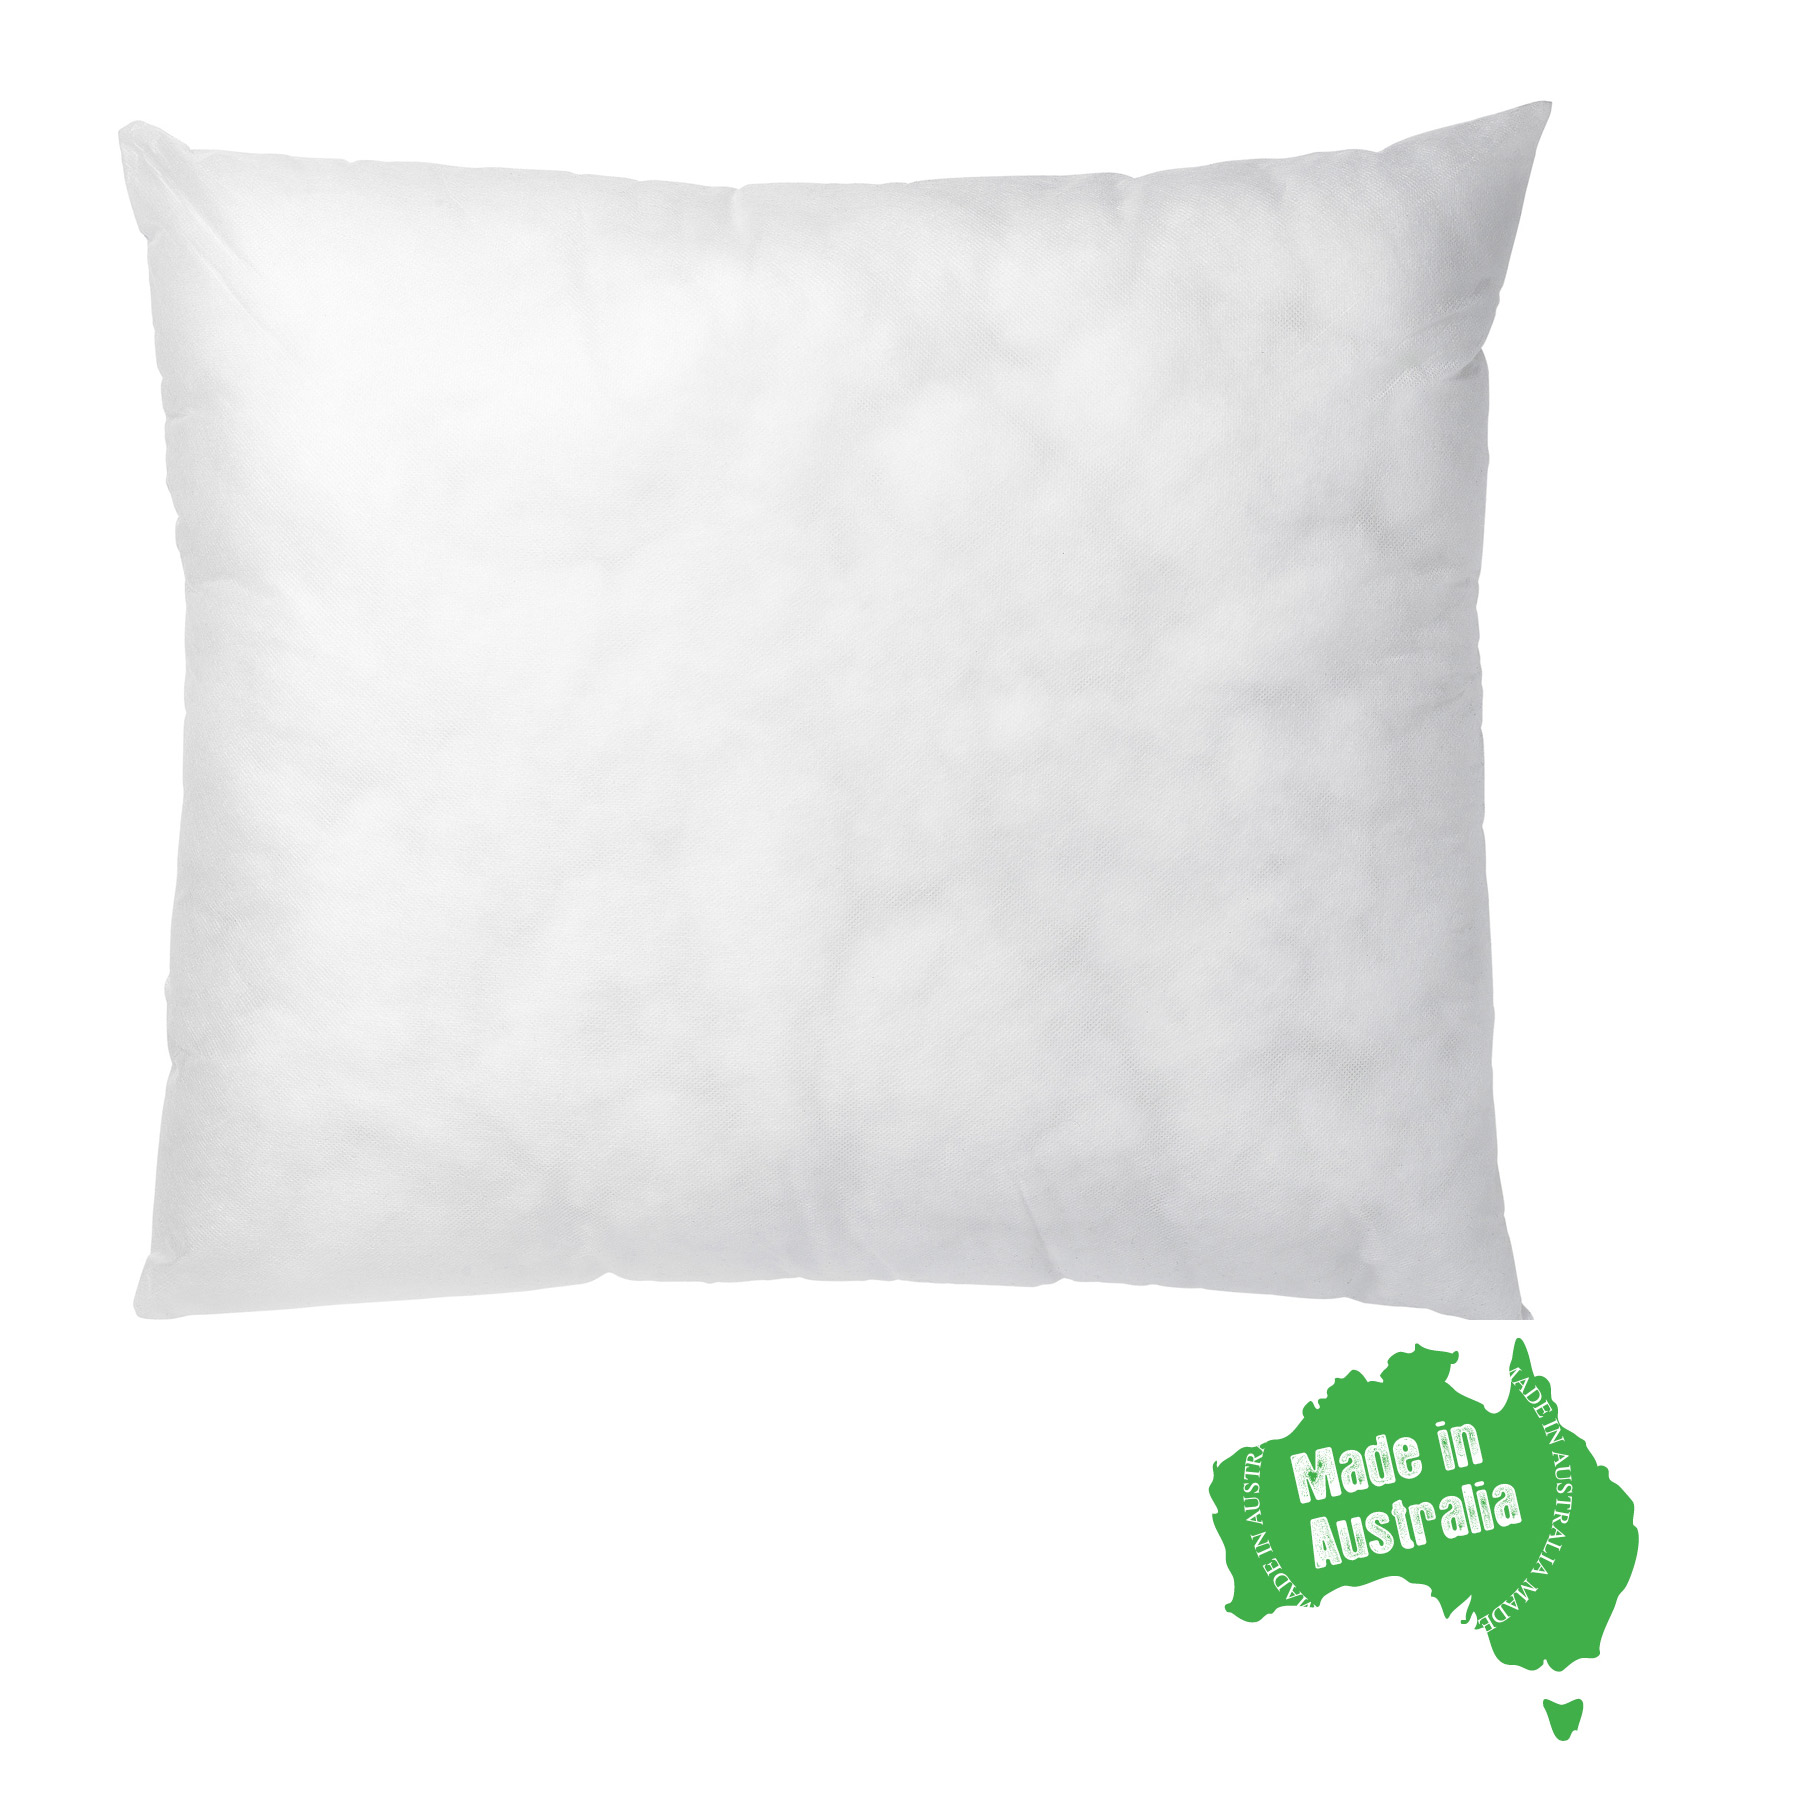 One European Pillow Insert 65x65cm Polyester Filled New Ebay